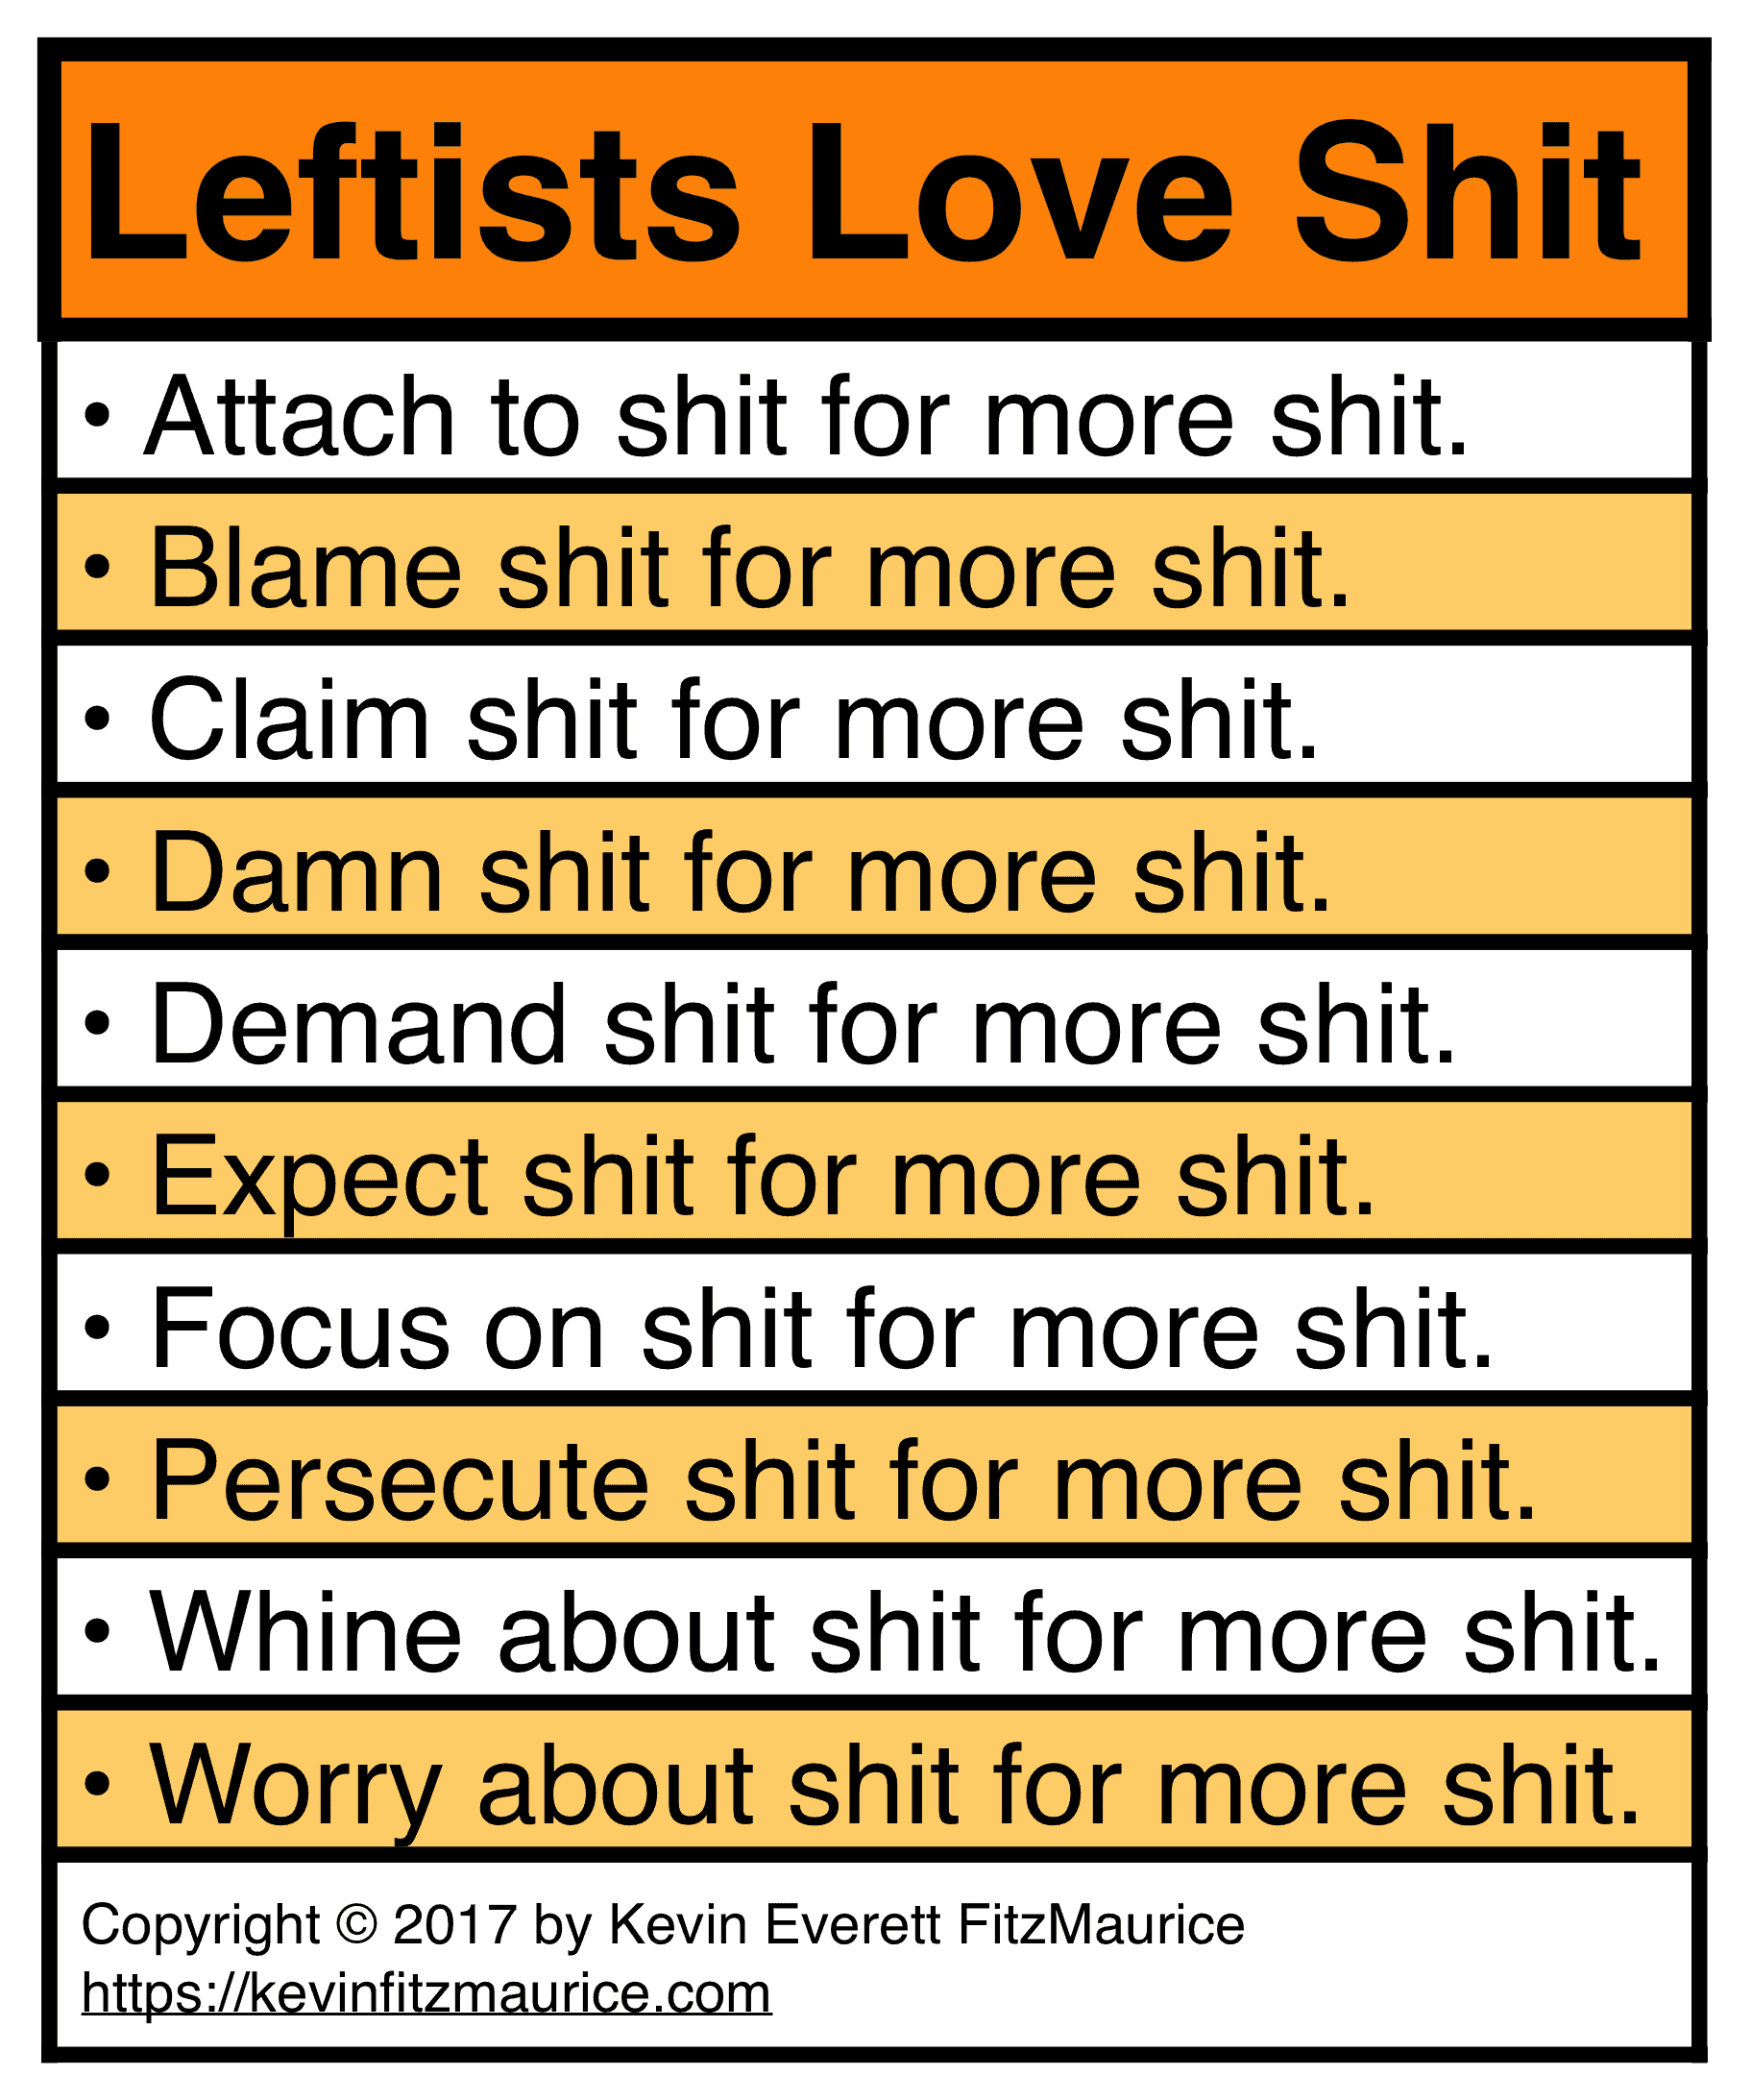 Leftists Love Shit